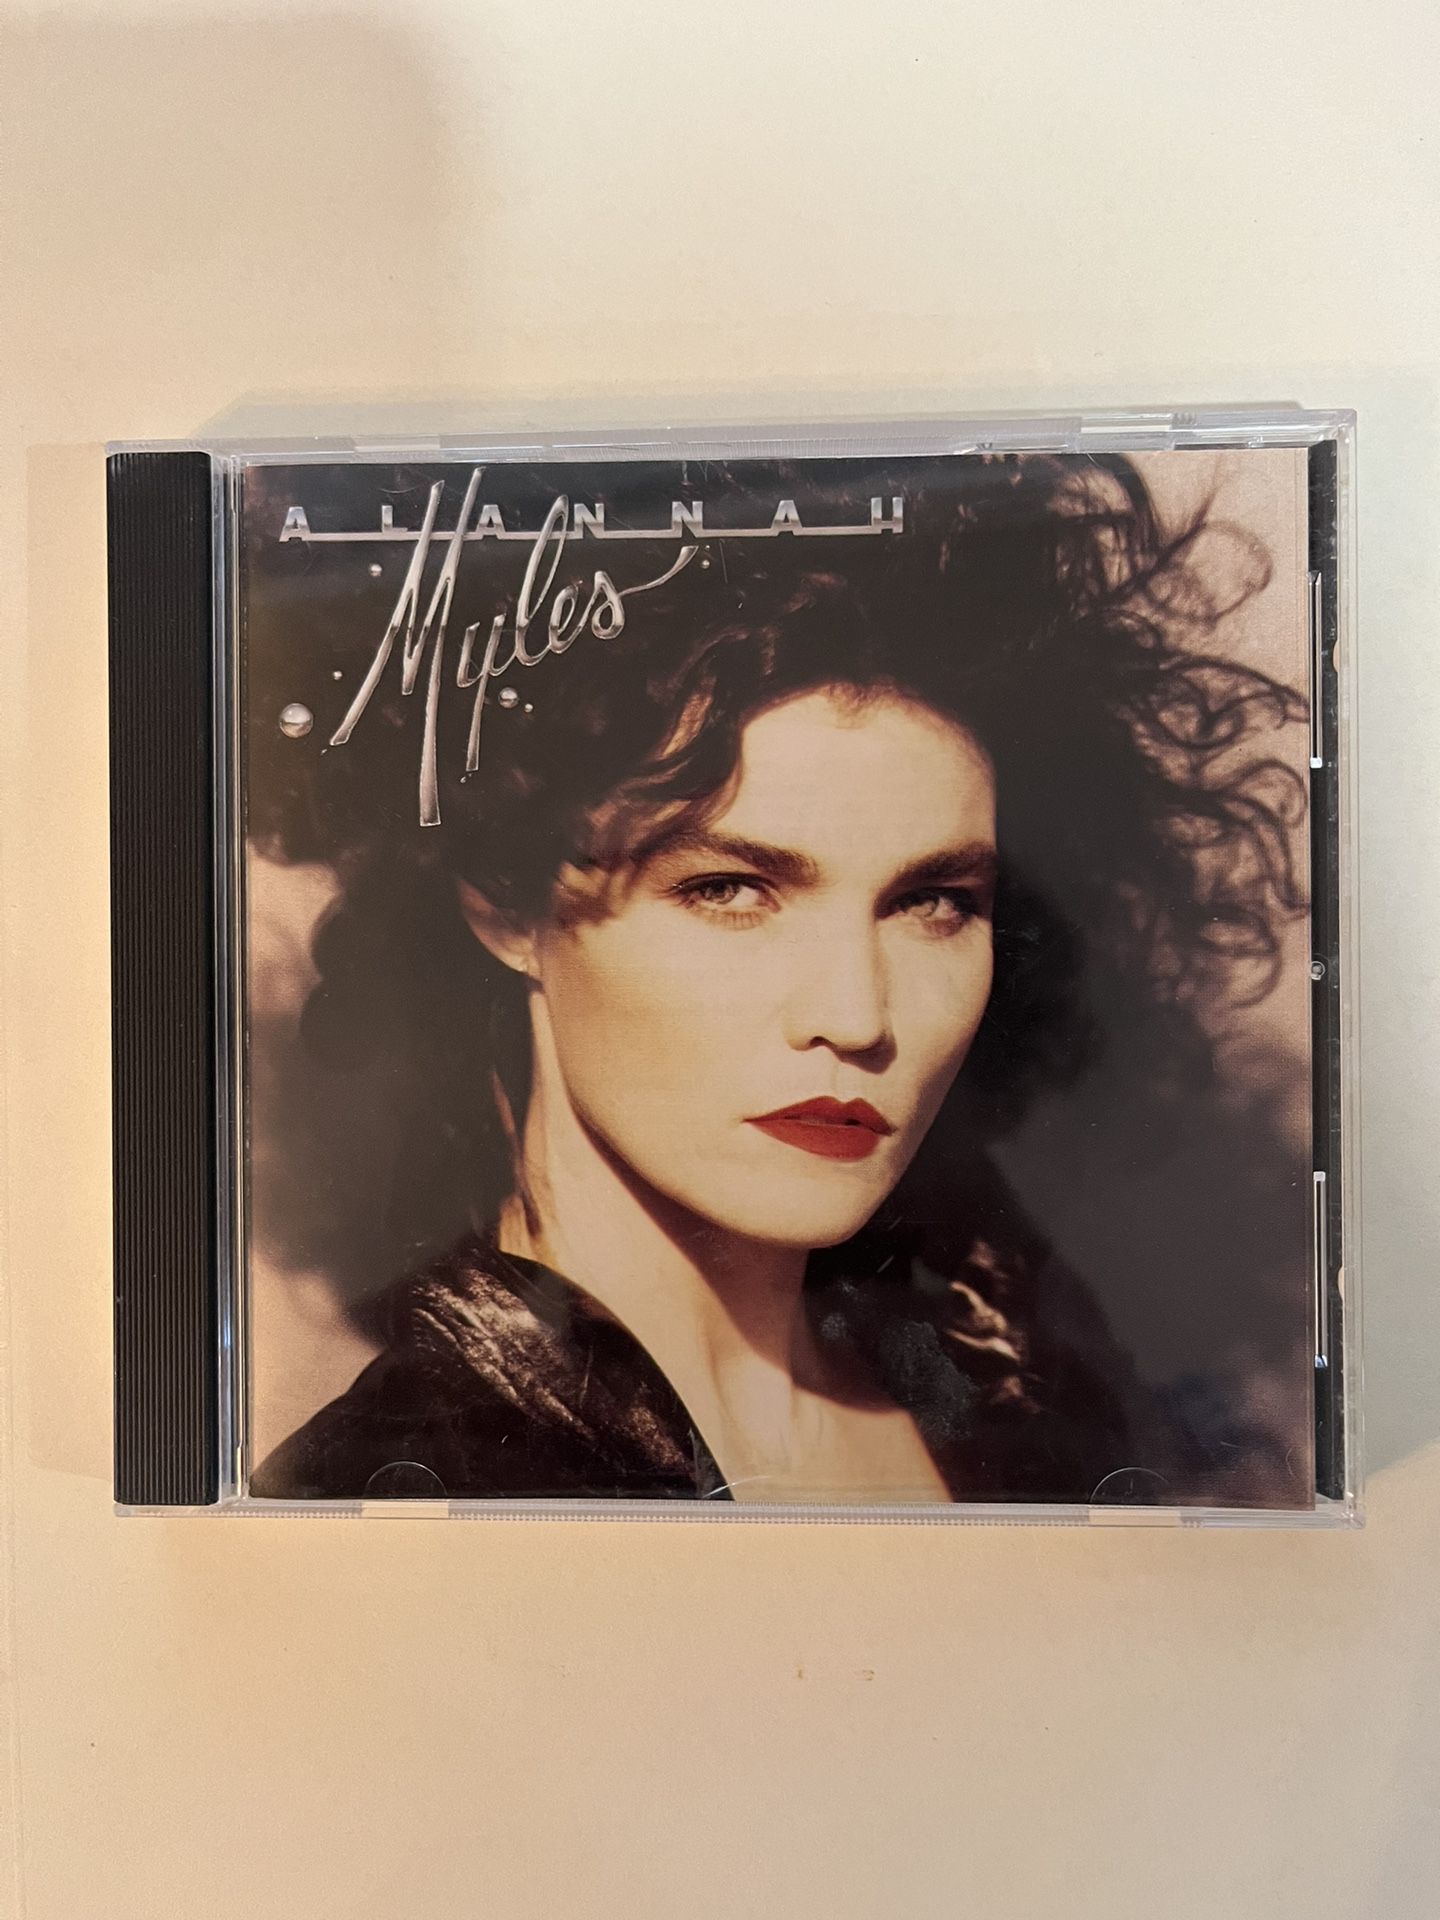 ALANNAH Myles -Self Titled Debut CD 